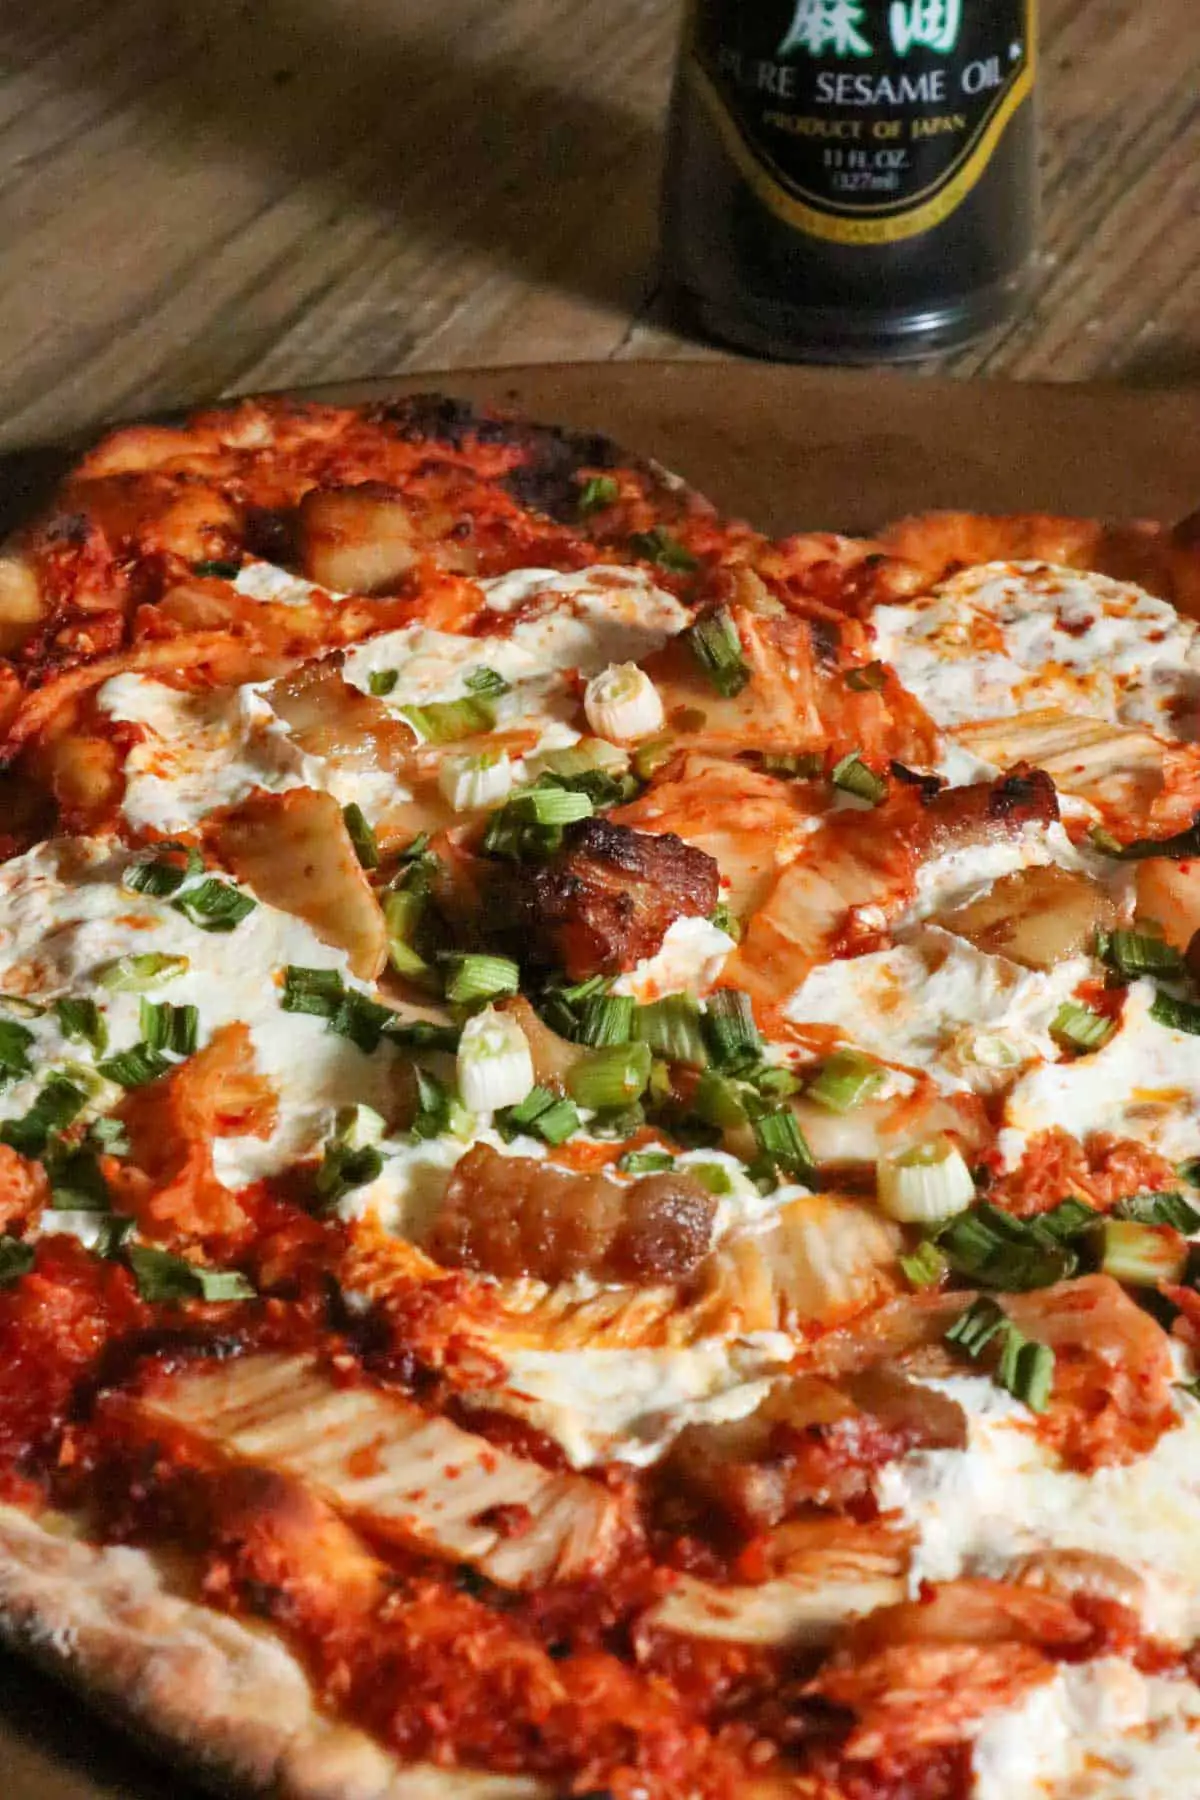 Pizza topped with mozzarella, kimchi, pork belly, tomato sauce, and green onions.